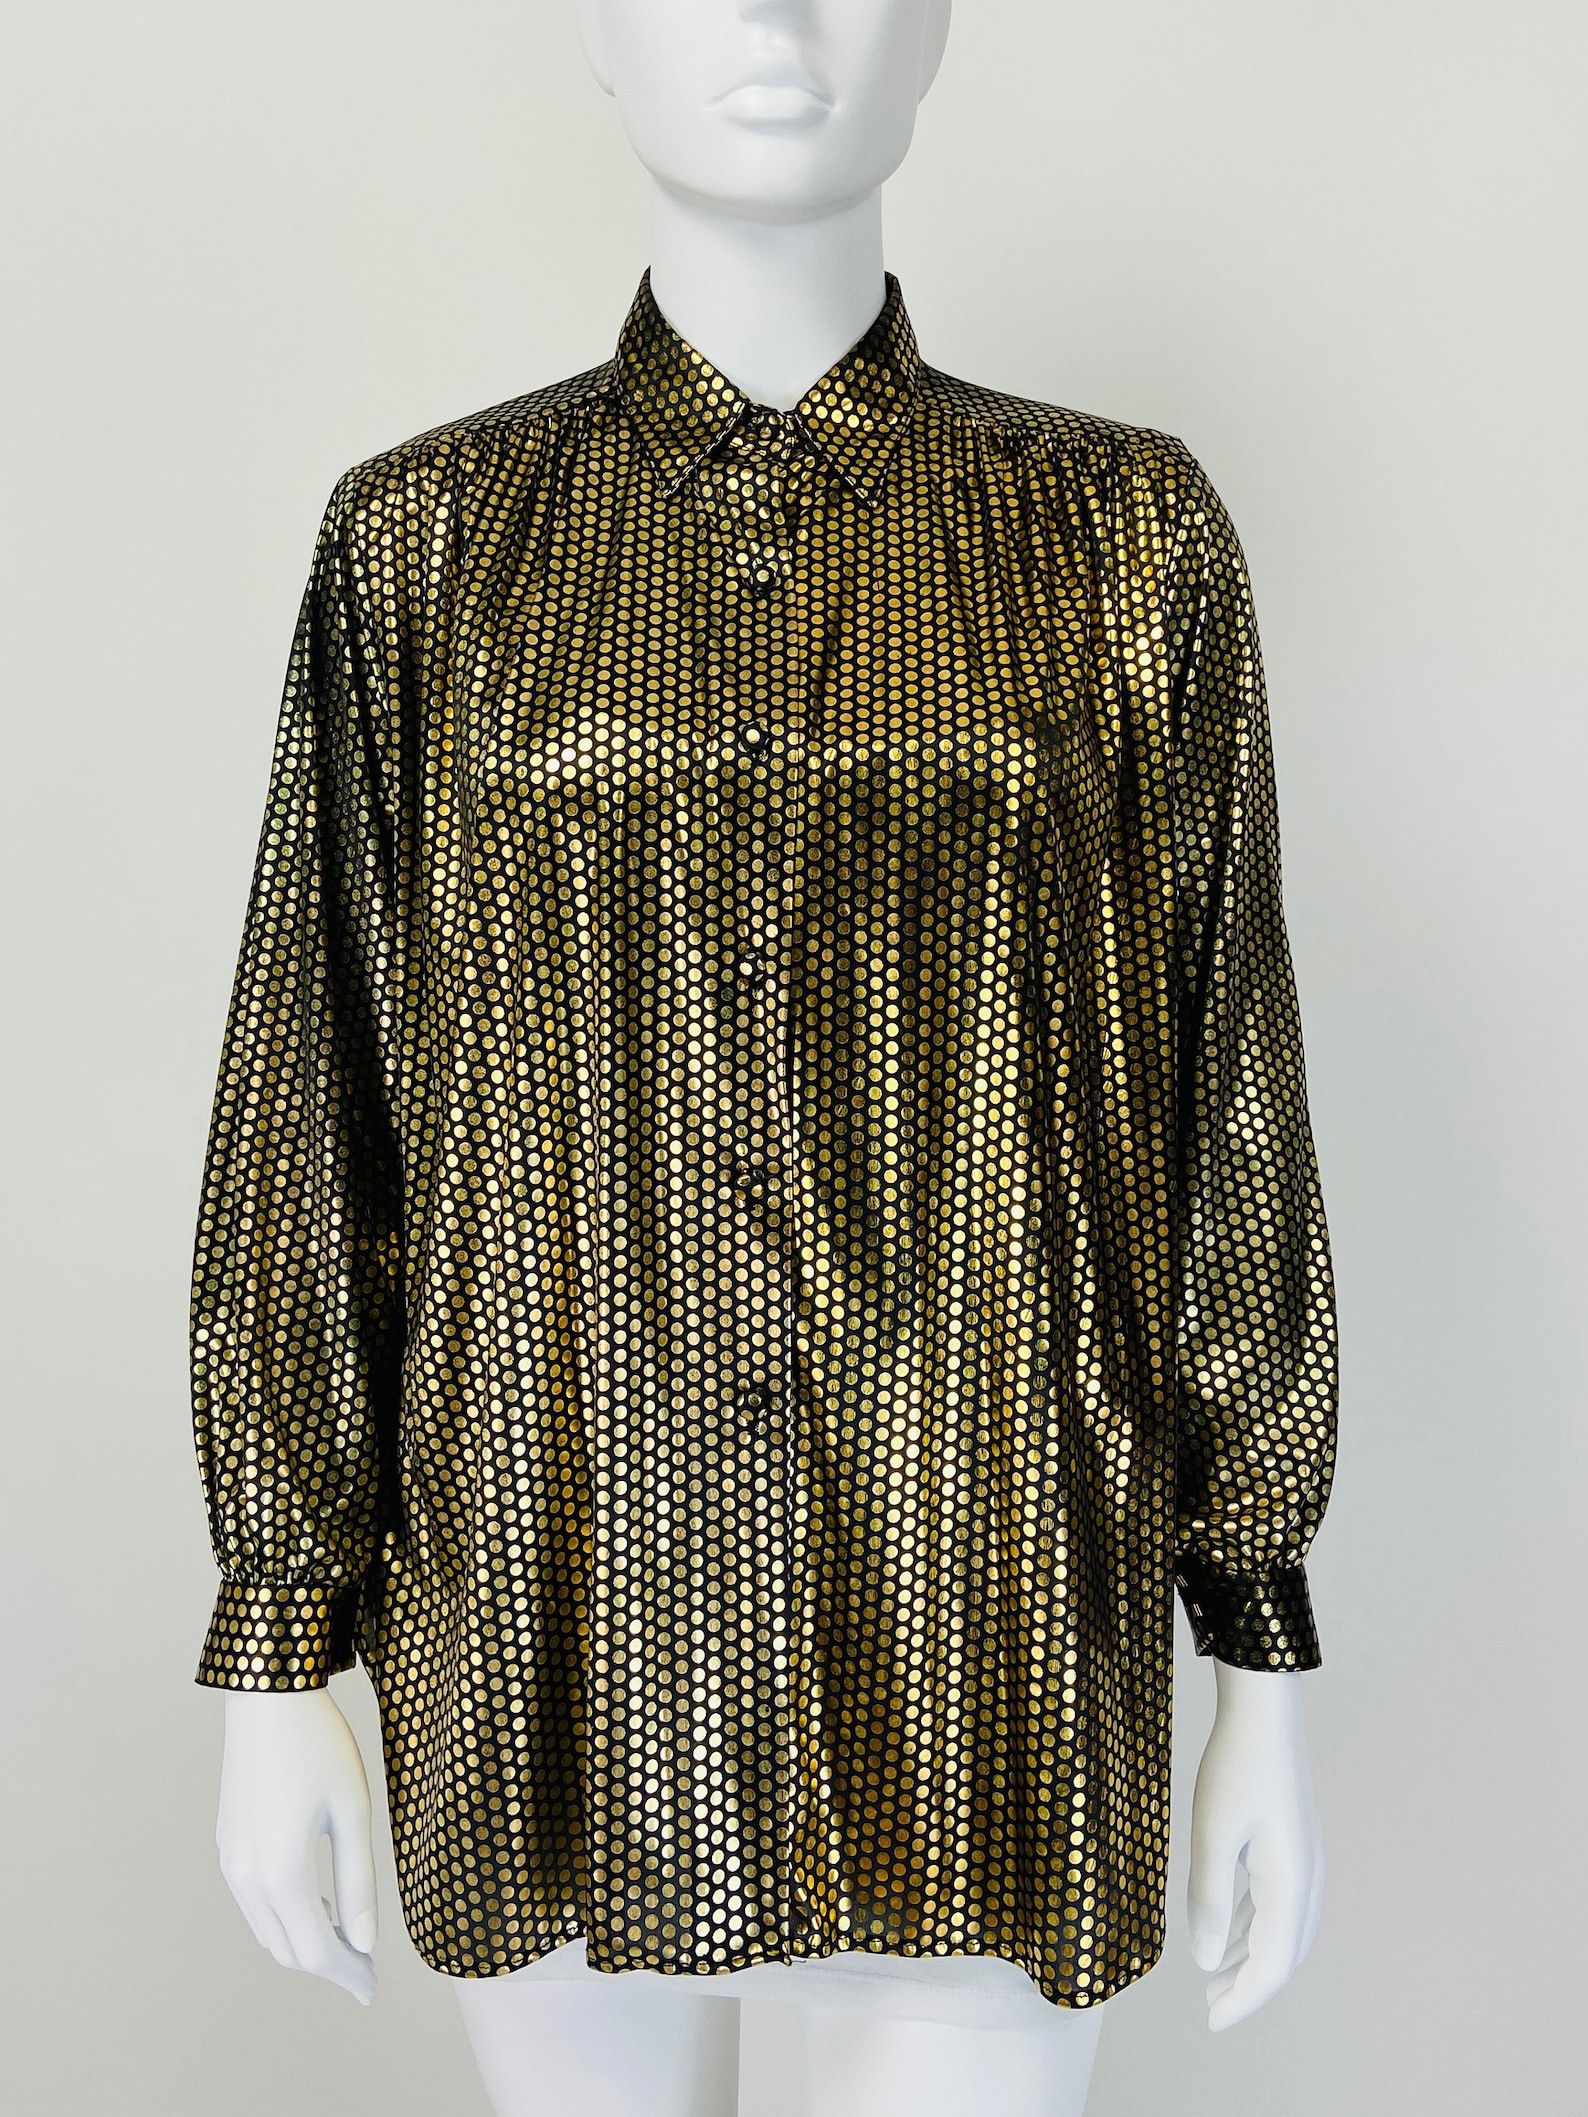 Vintage 80s Shirt Oversize Top Metallic Gold Blouse Polka | Etsy